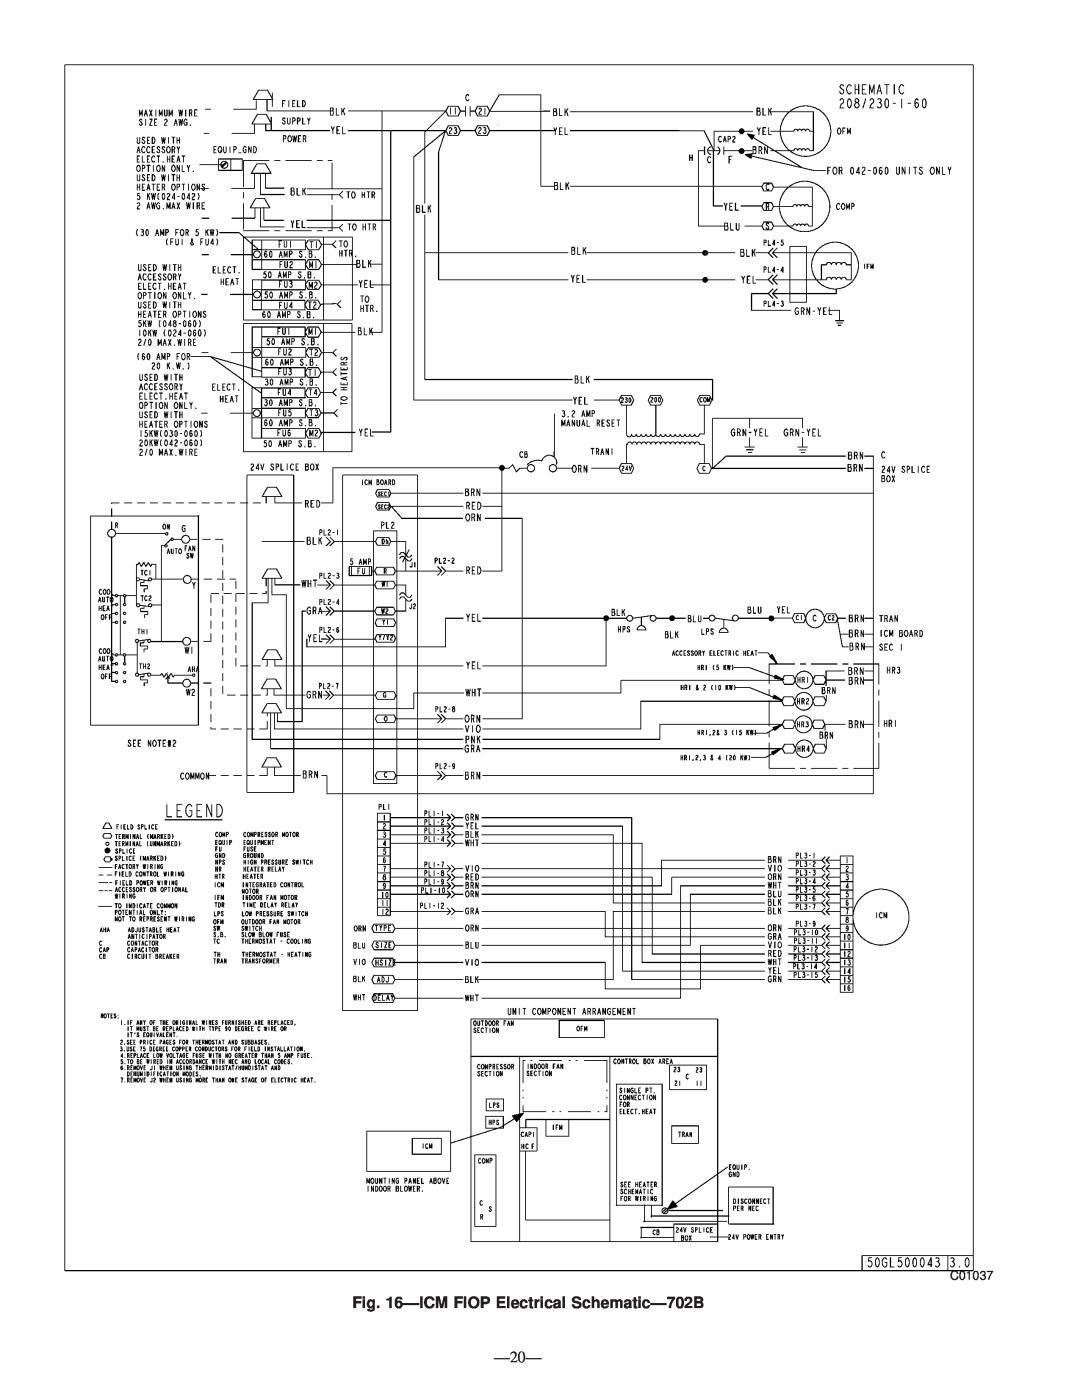 Bryant 583B, 683B, 602B installation instructions ÐICM FIOP Electrical SchematicÐ702B, Ð20Ð 